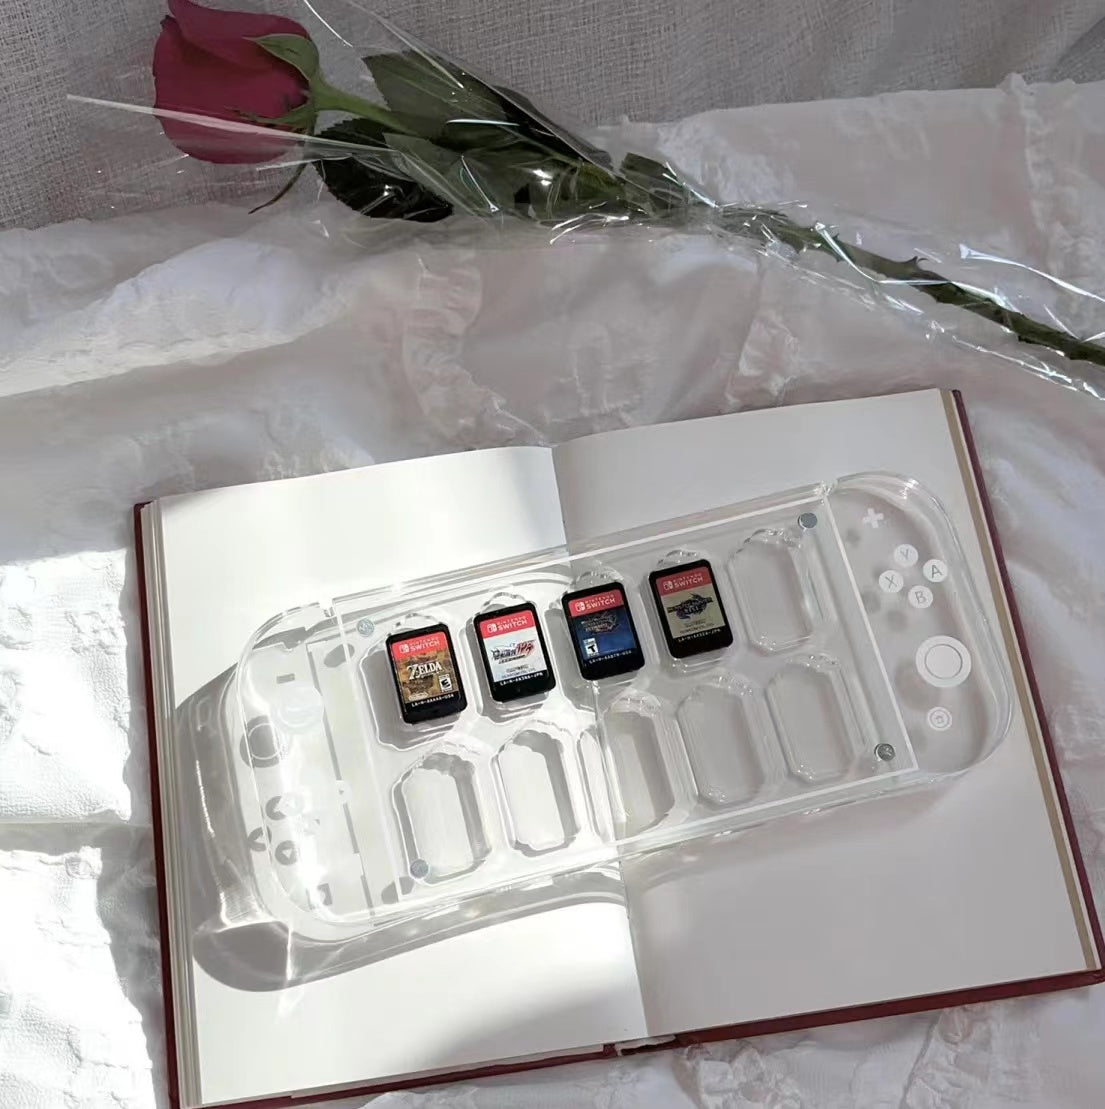 BlingKiyo Nintendo Switch Shape Acrylic Game Card Case